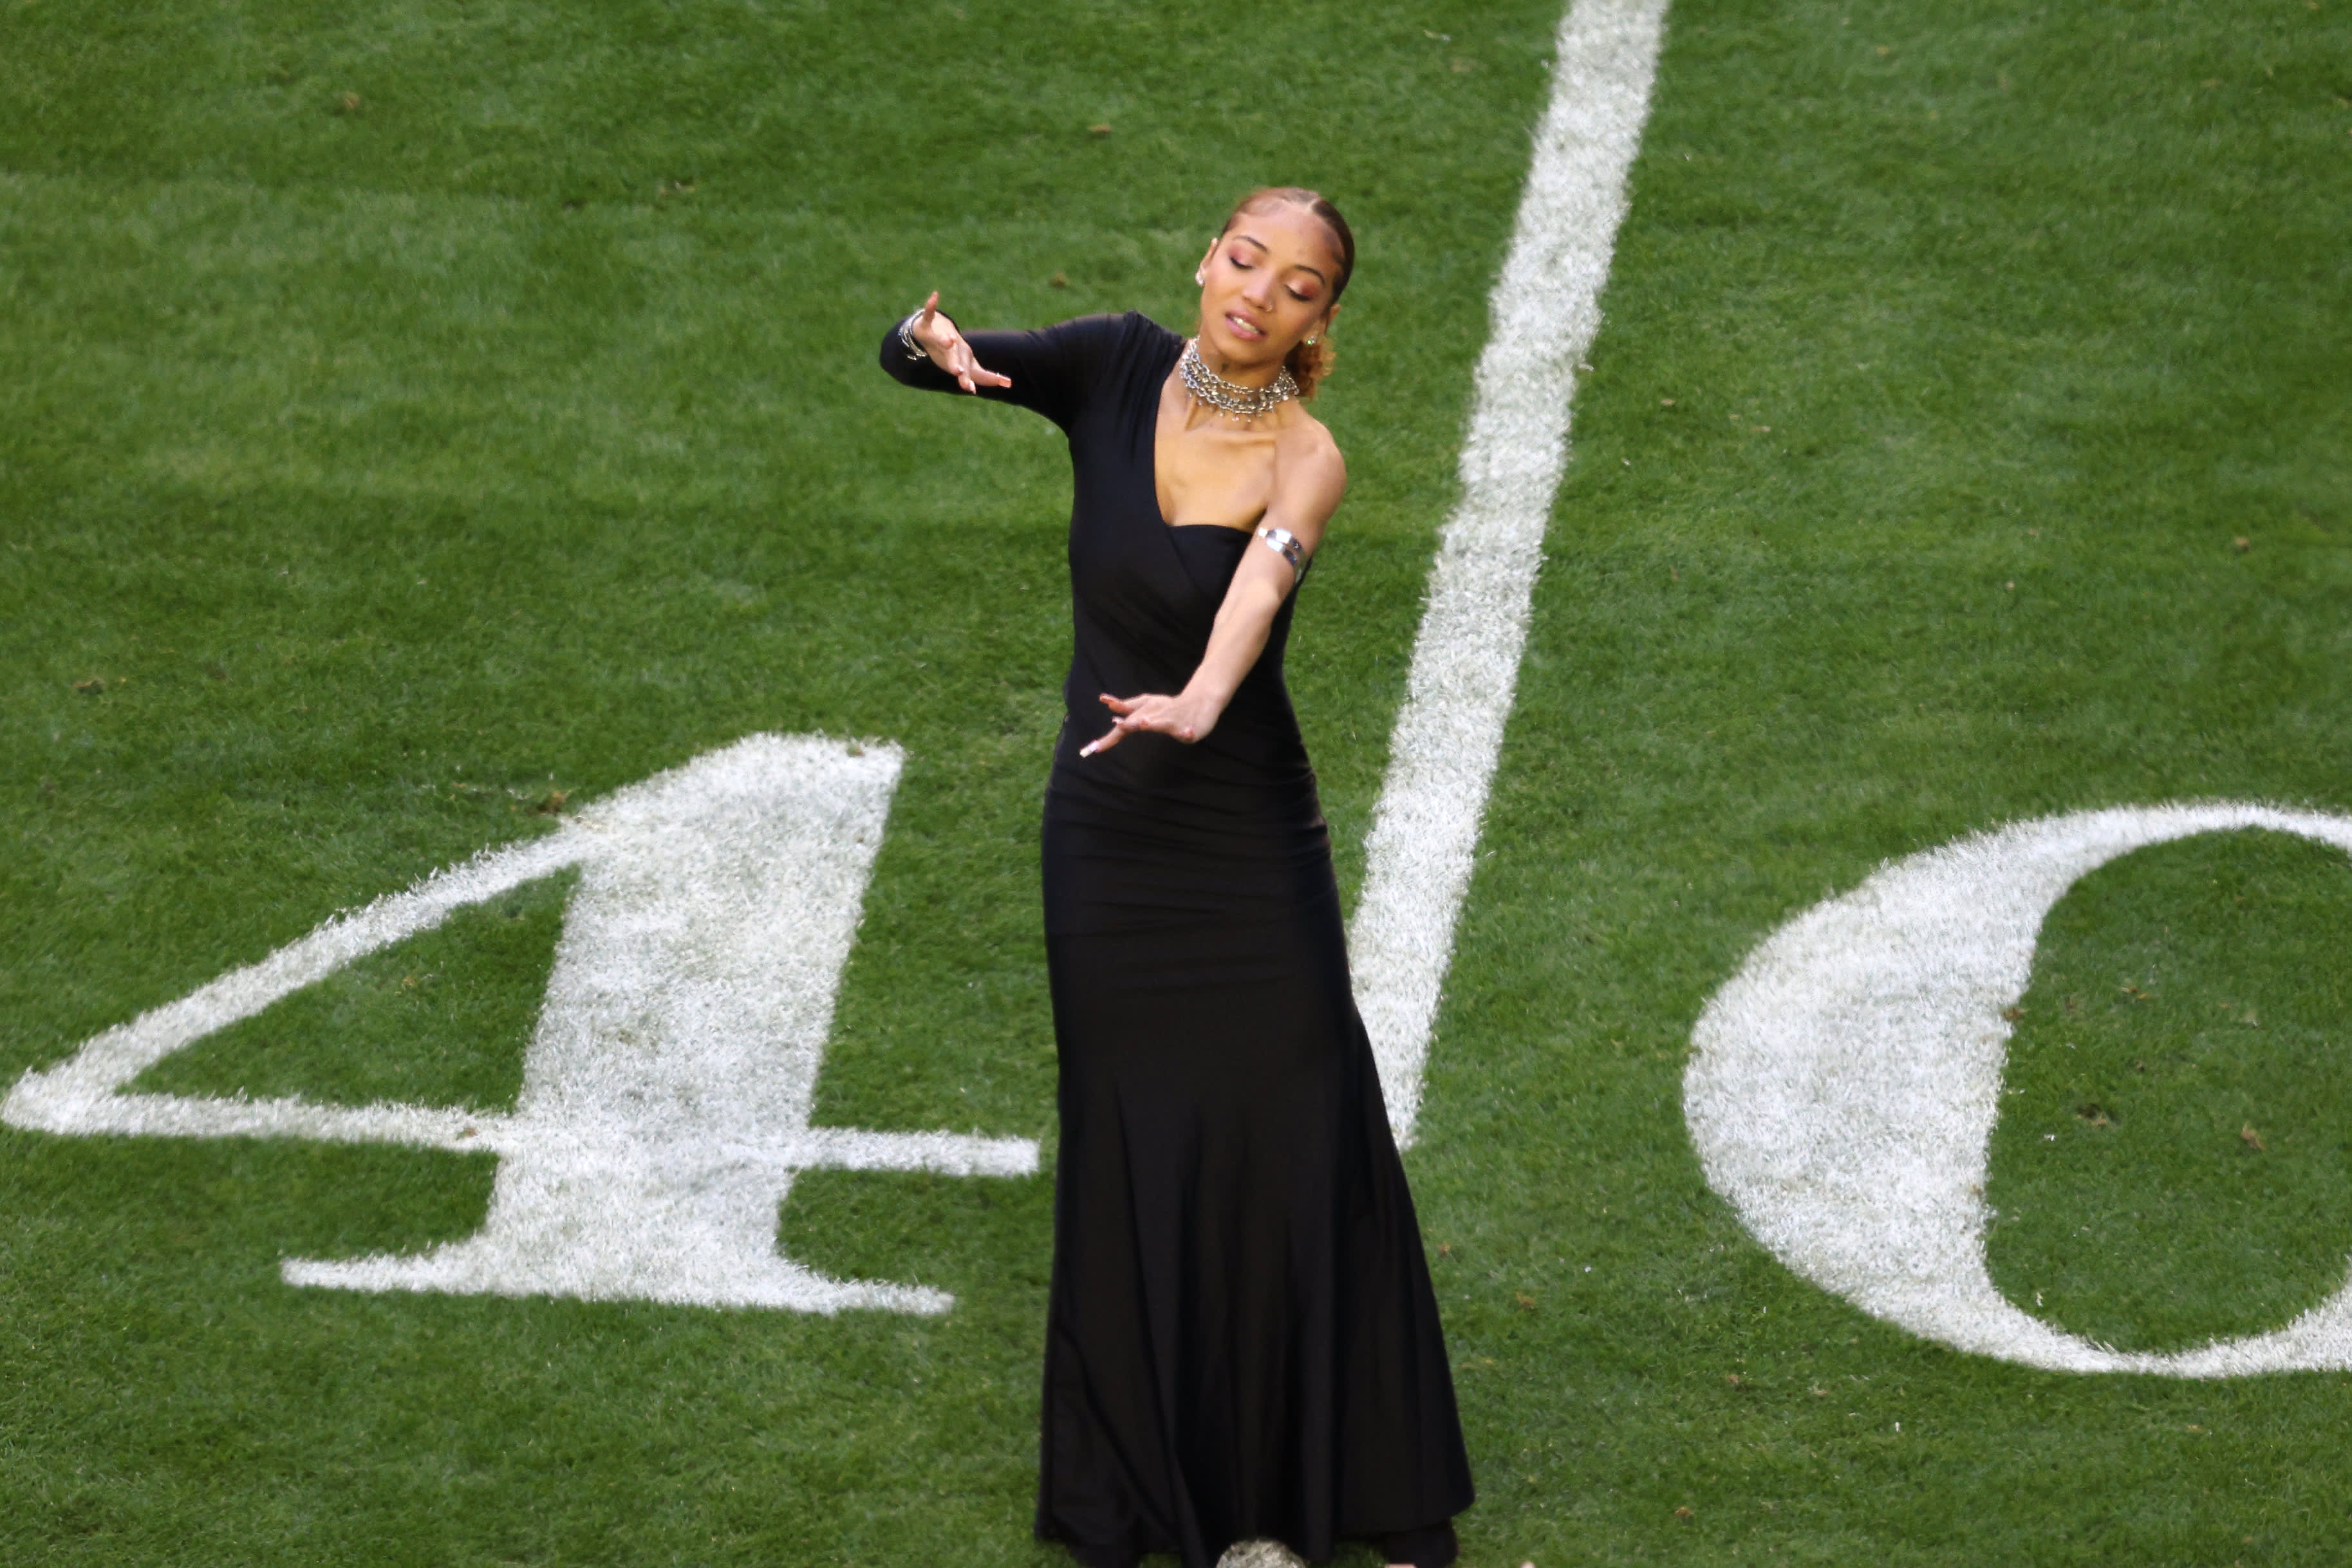 Meet Justina Miles, Rihannas Super Bowl halftime show ASL performer